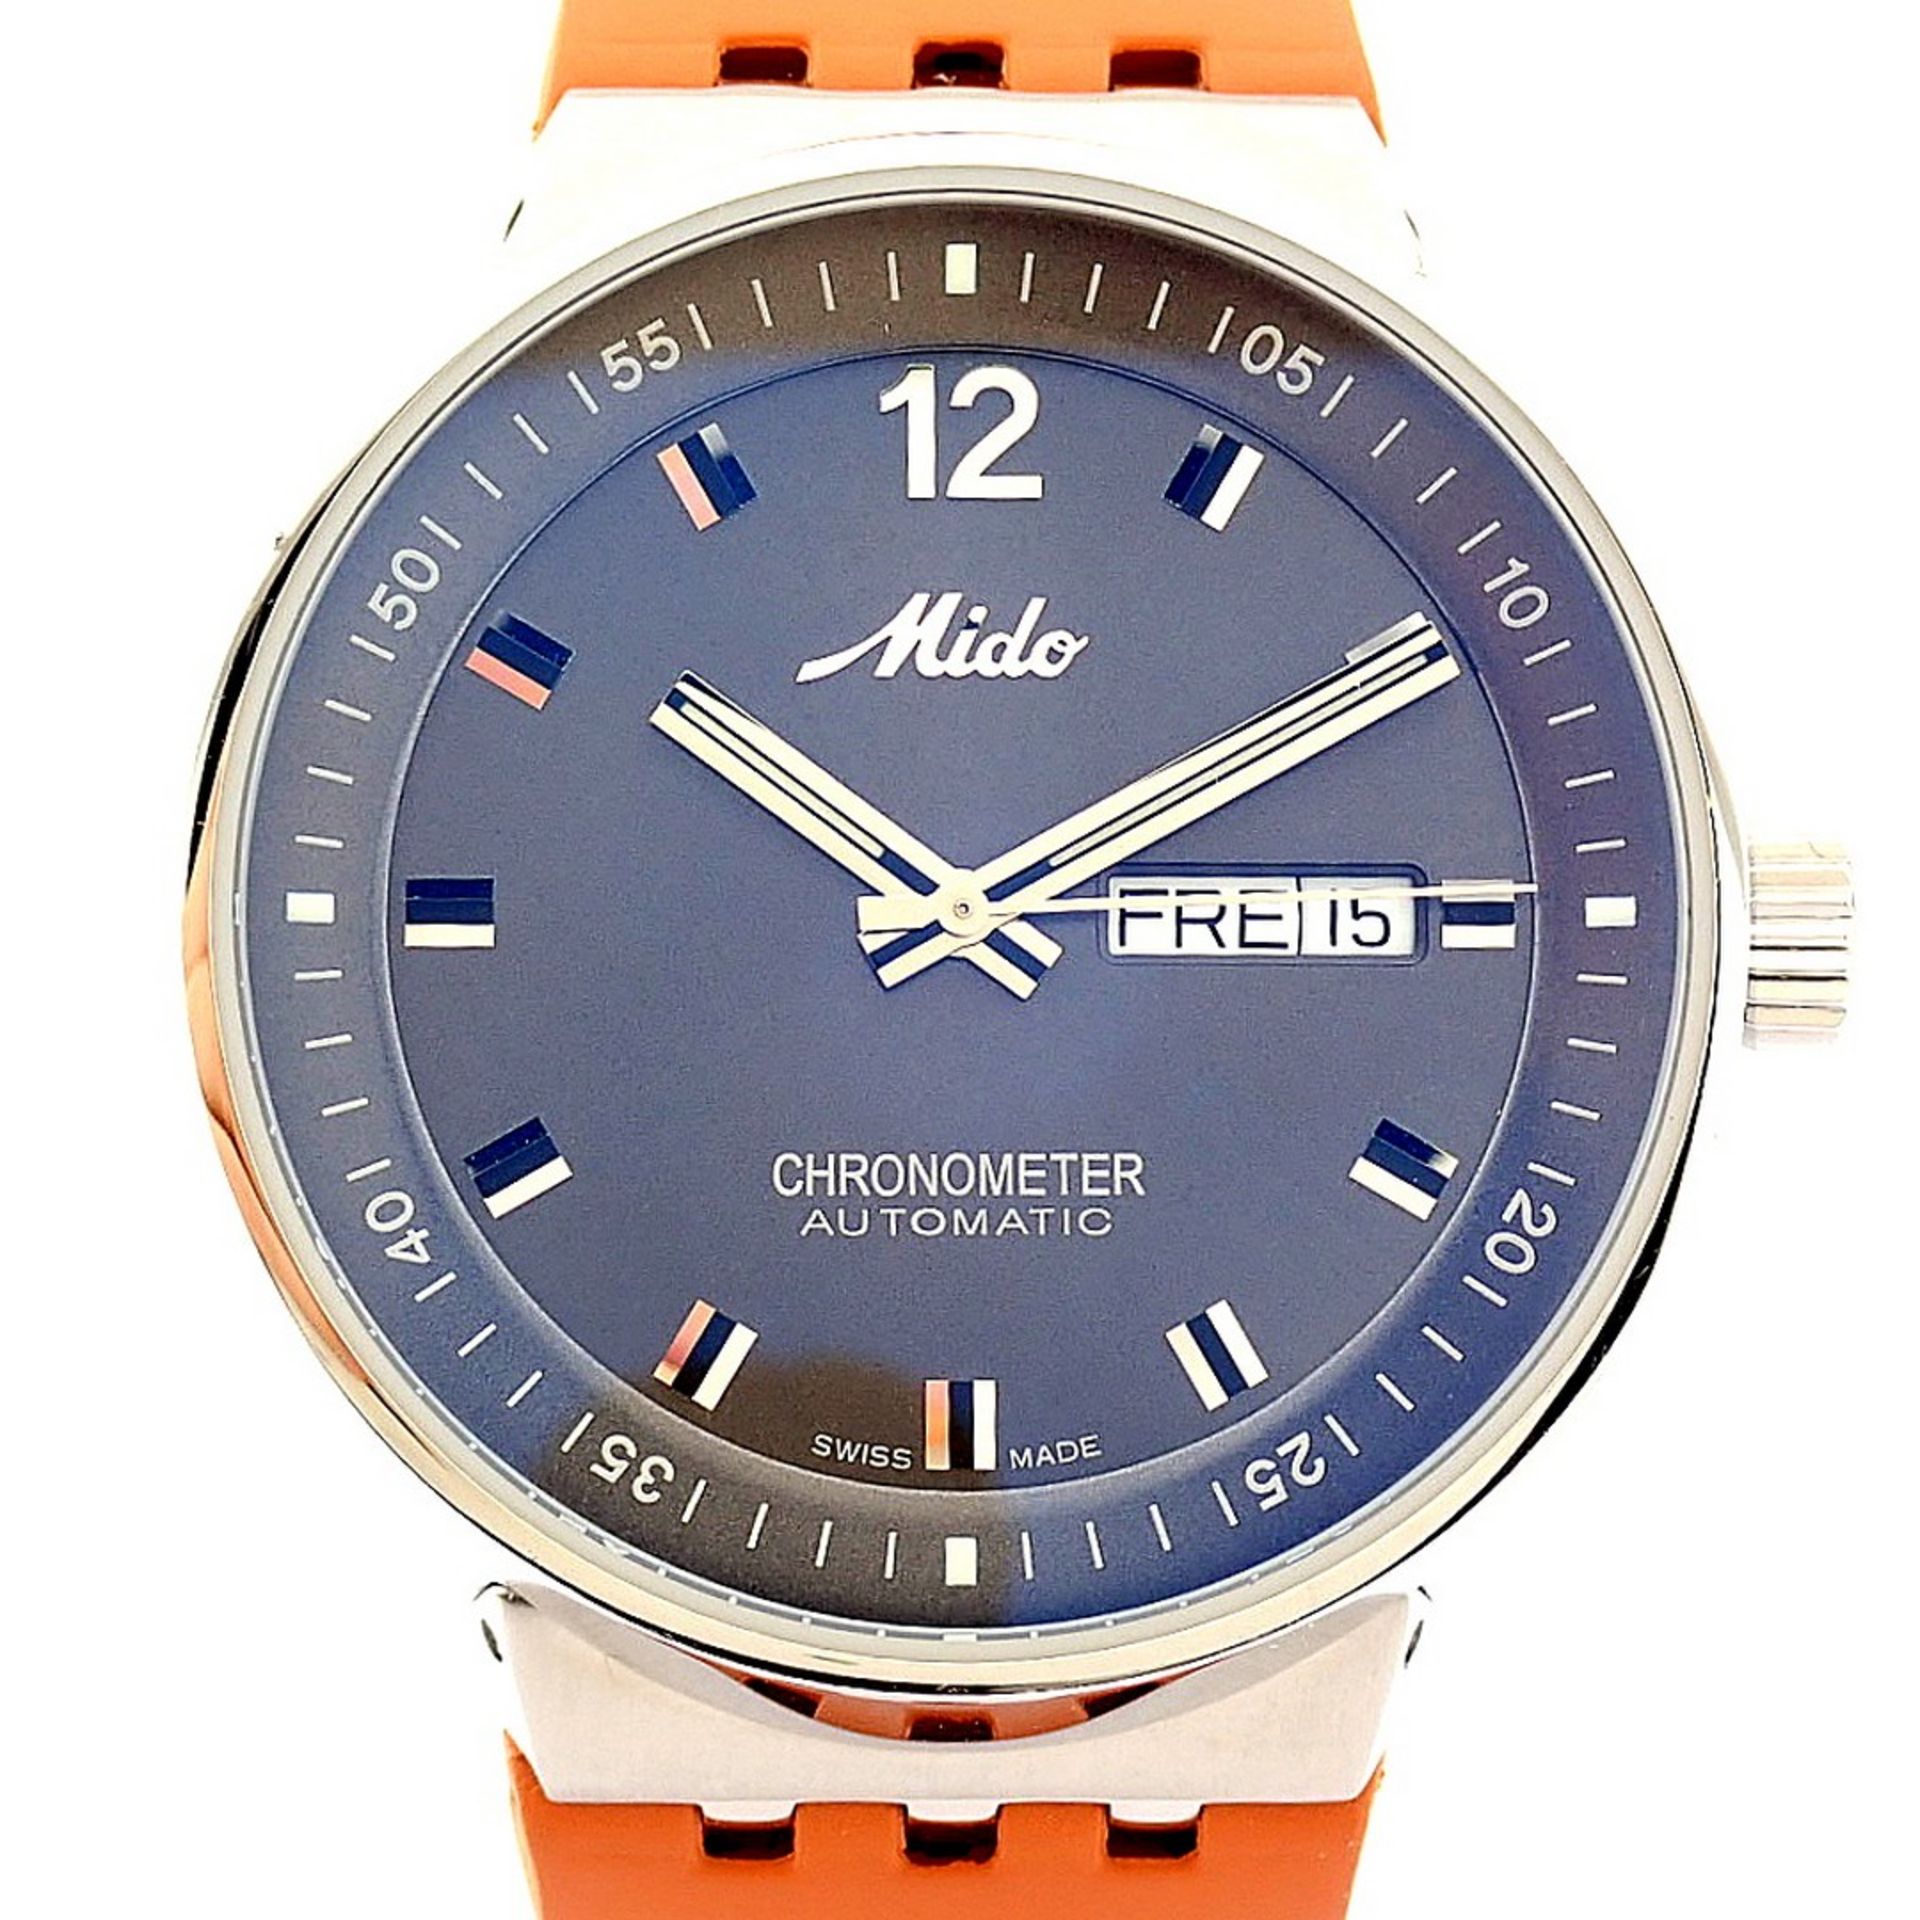 Mido / All Dial Day Date Chronometer Automatic Transparent (Unworn) - Gentlemen's Steel Wristwatc... - Image 5 of 12